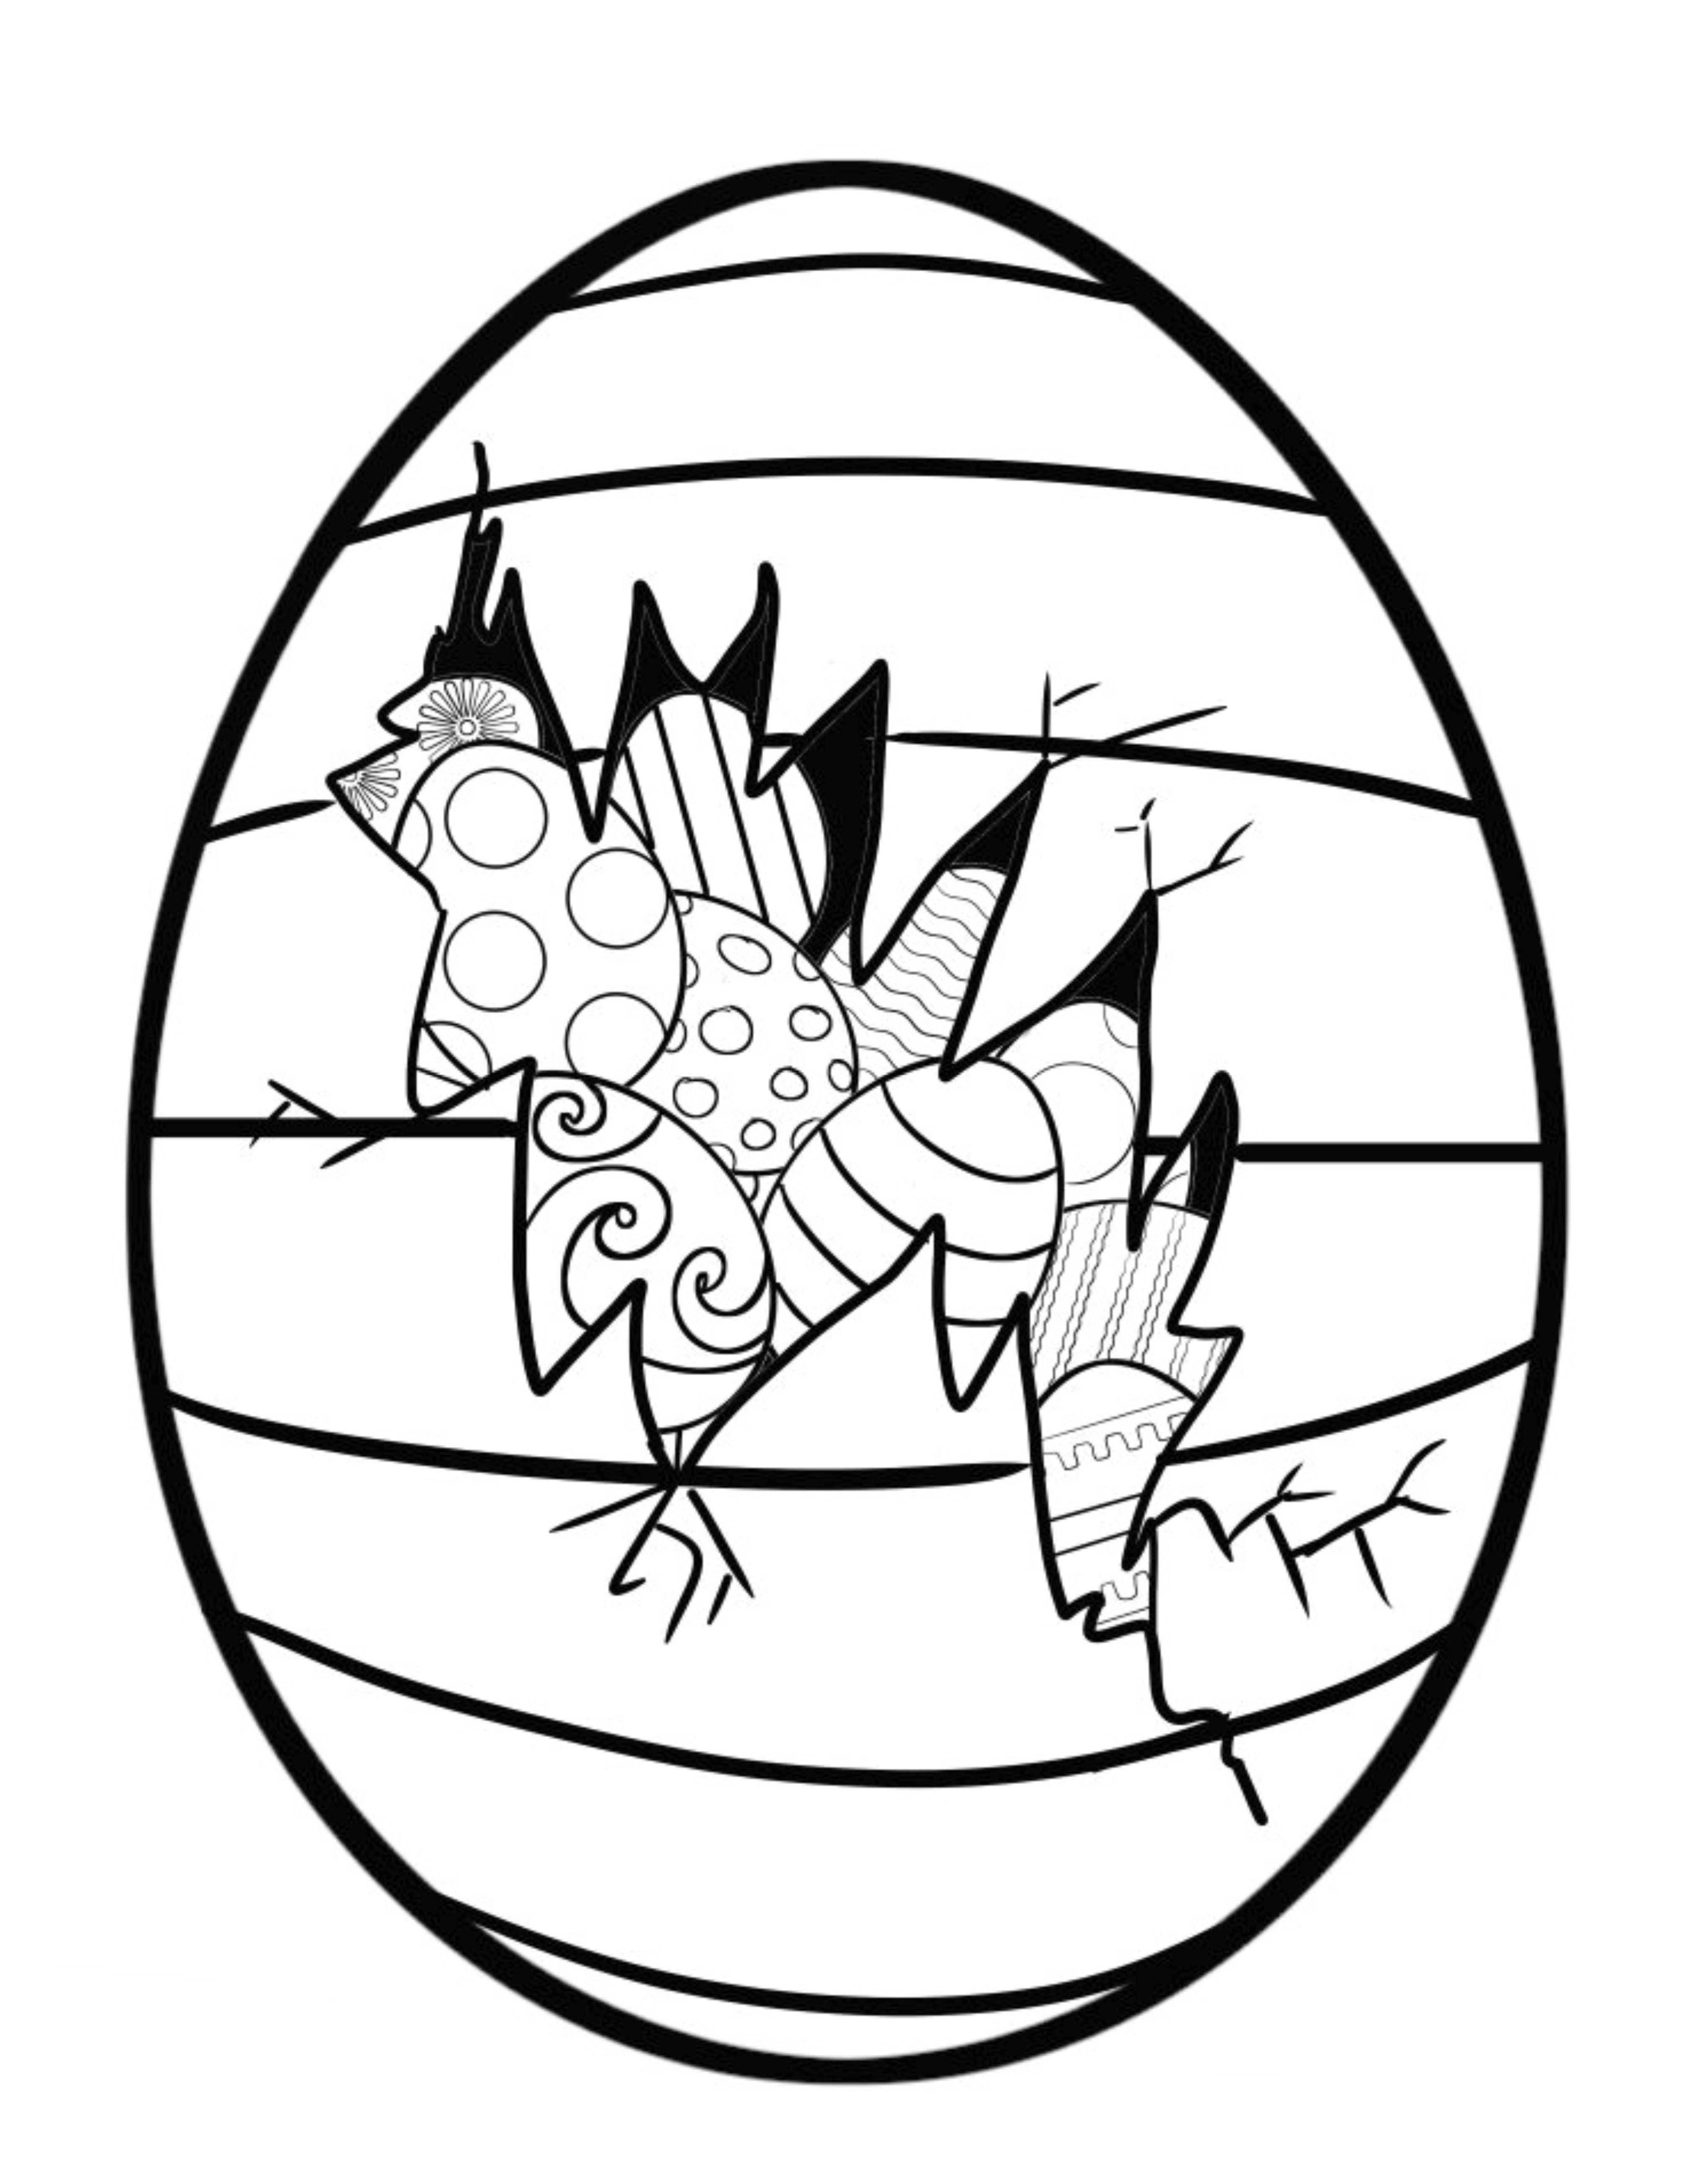 Hospers Easter Egg Hunt & Coloring Contest | Hospers Iowa